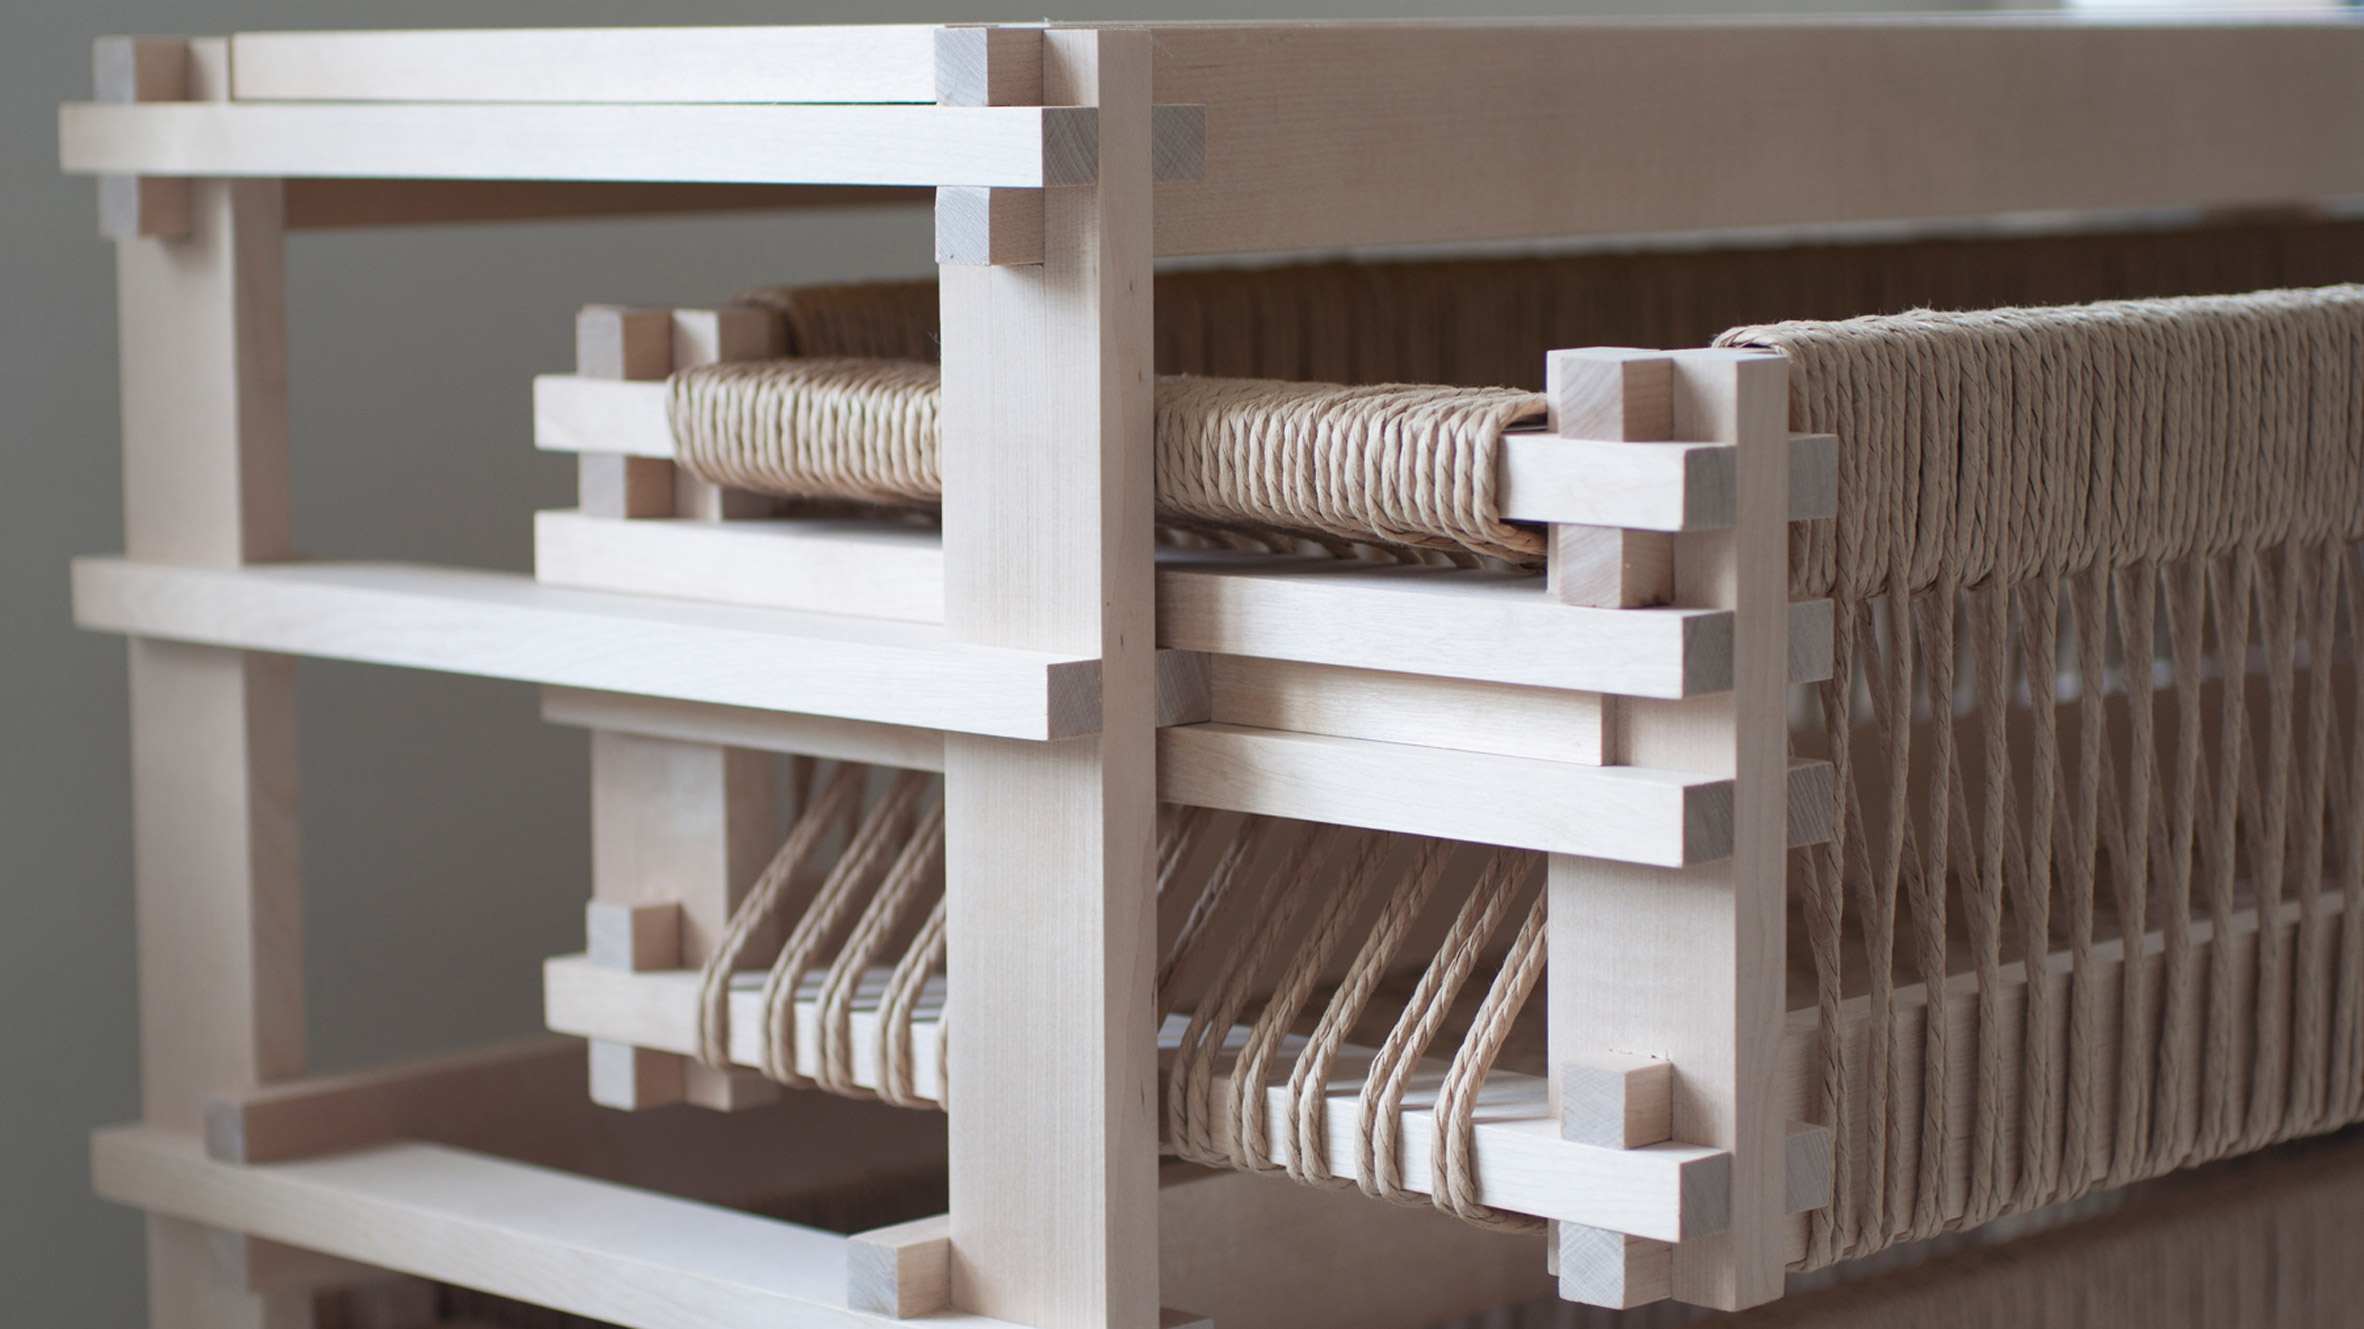 Martin Thübeck assembles modular furniture collection using one